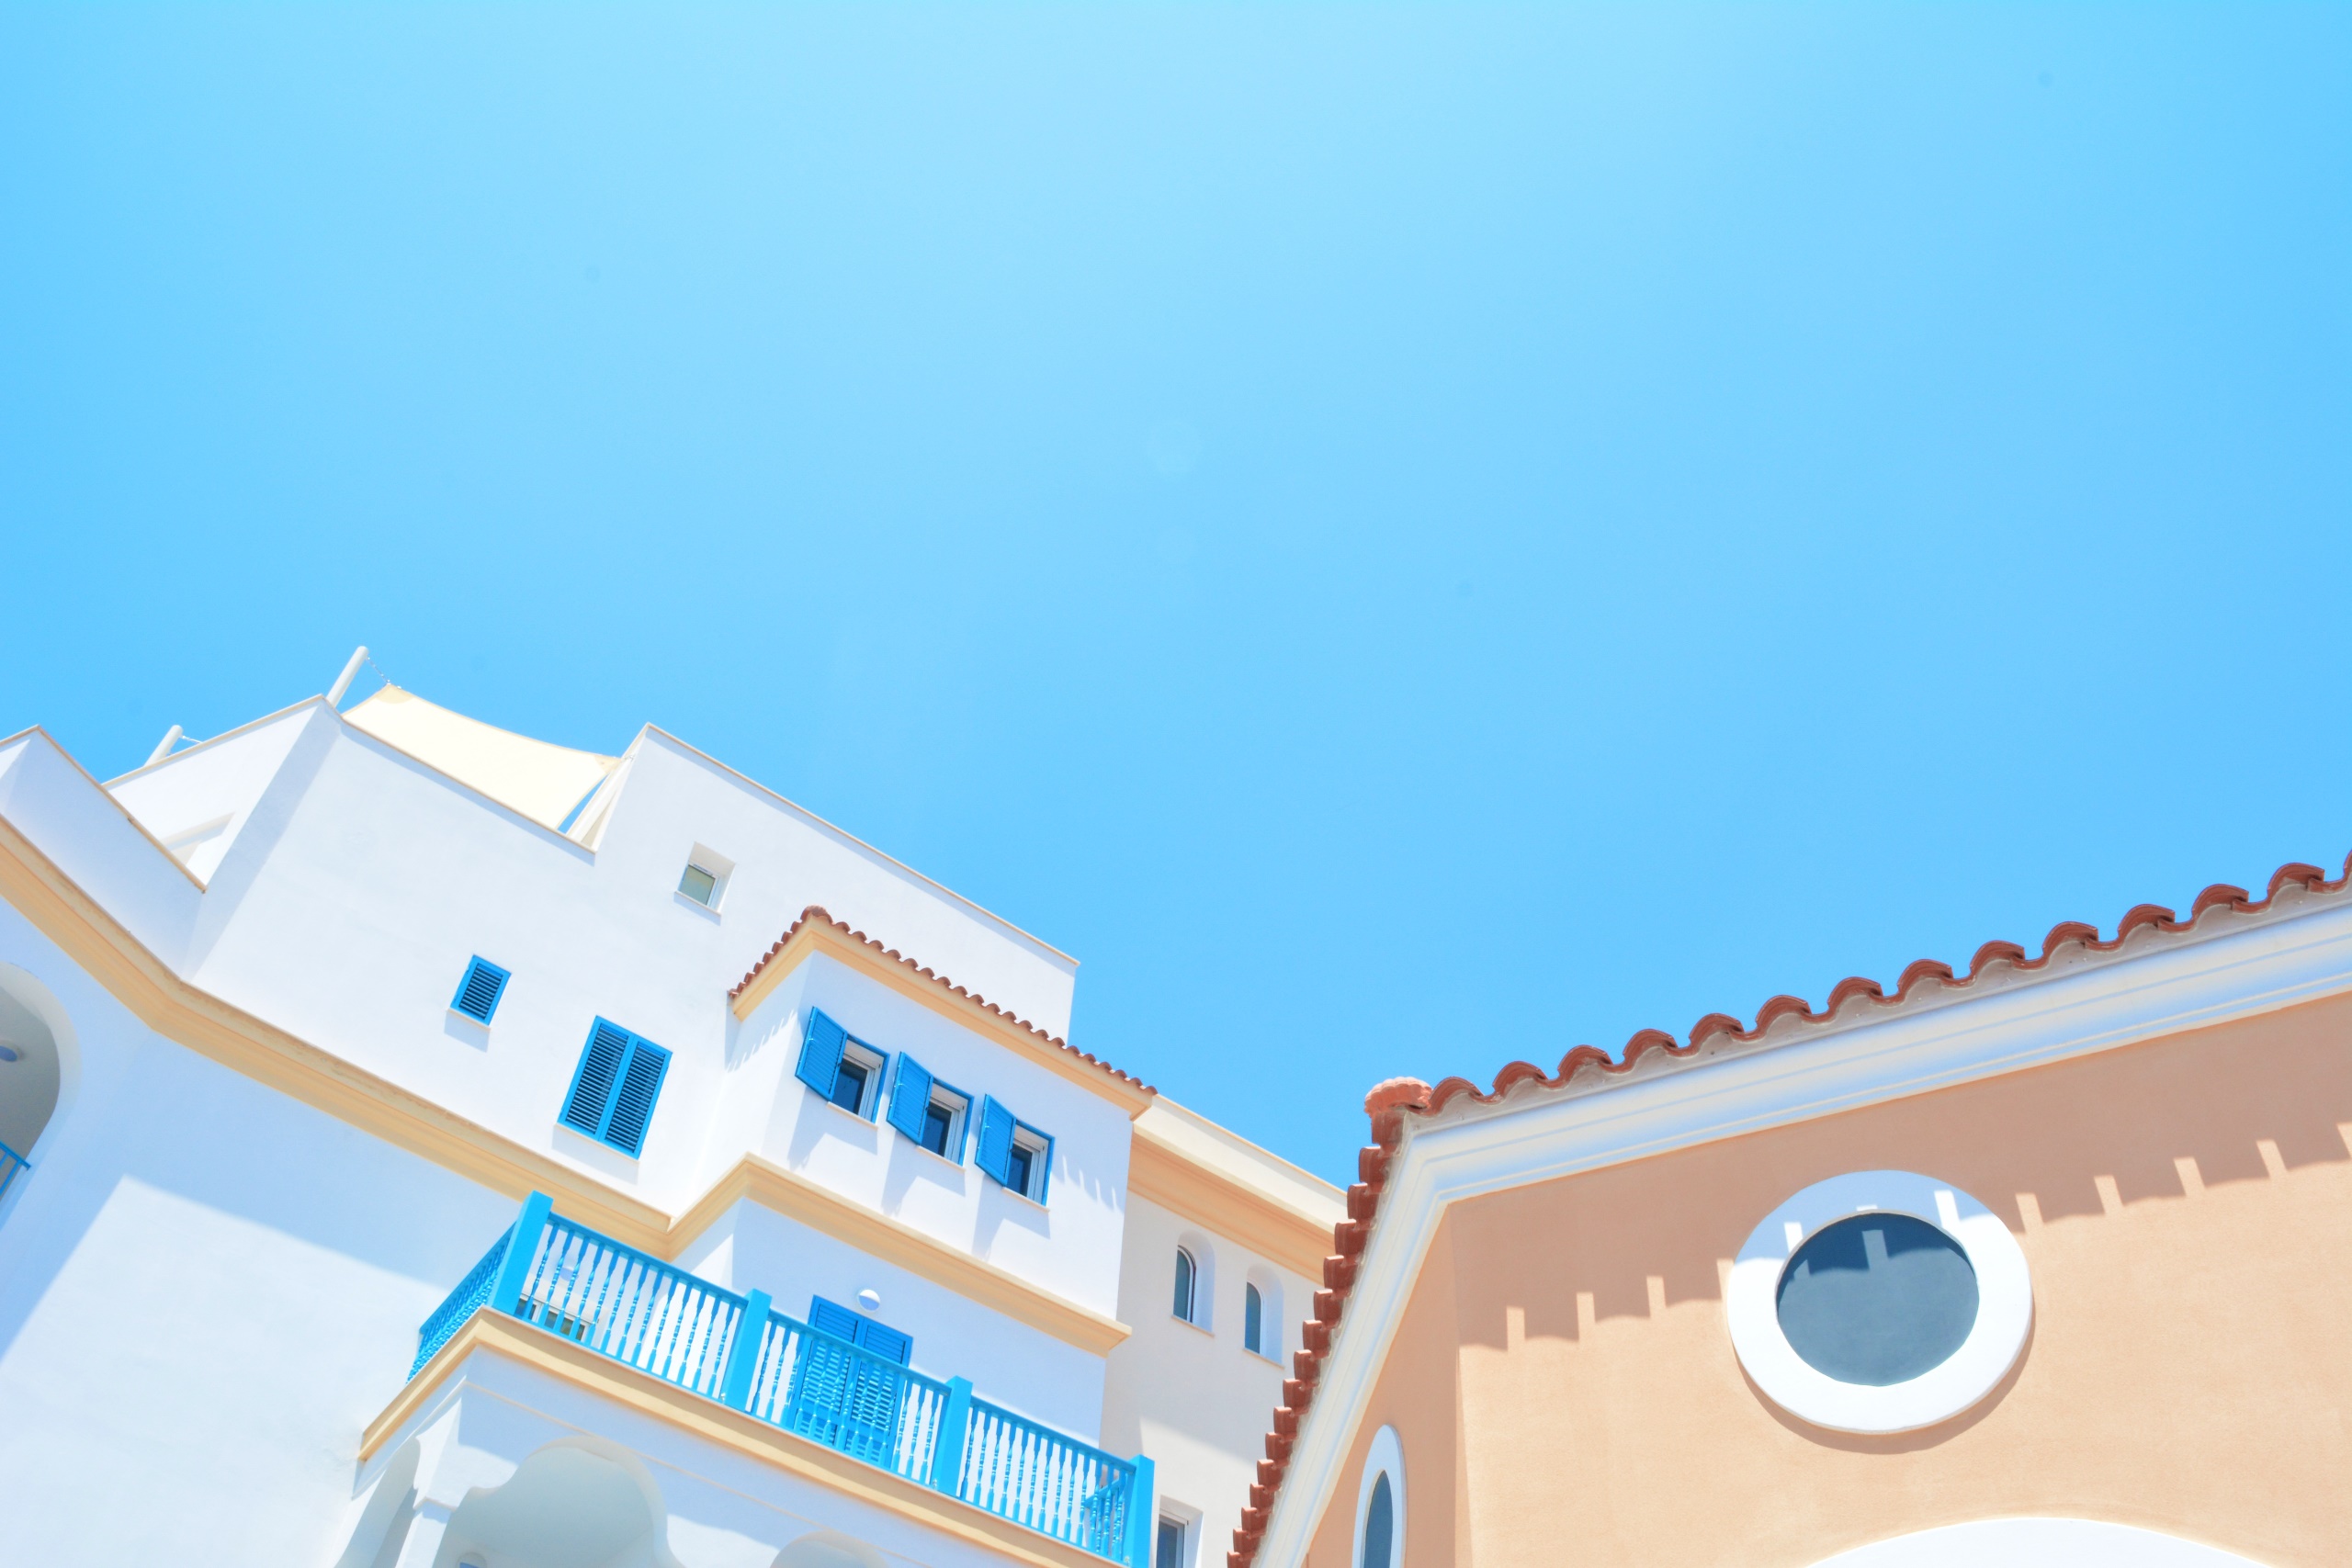 General 2560x1707 sky Greece building bright clear sky sunlight daylight architecture sky blue cyan